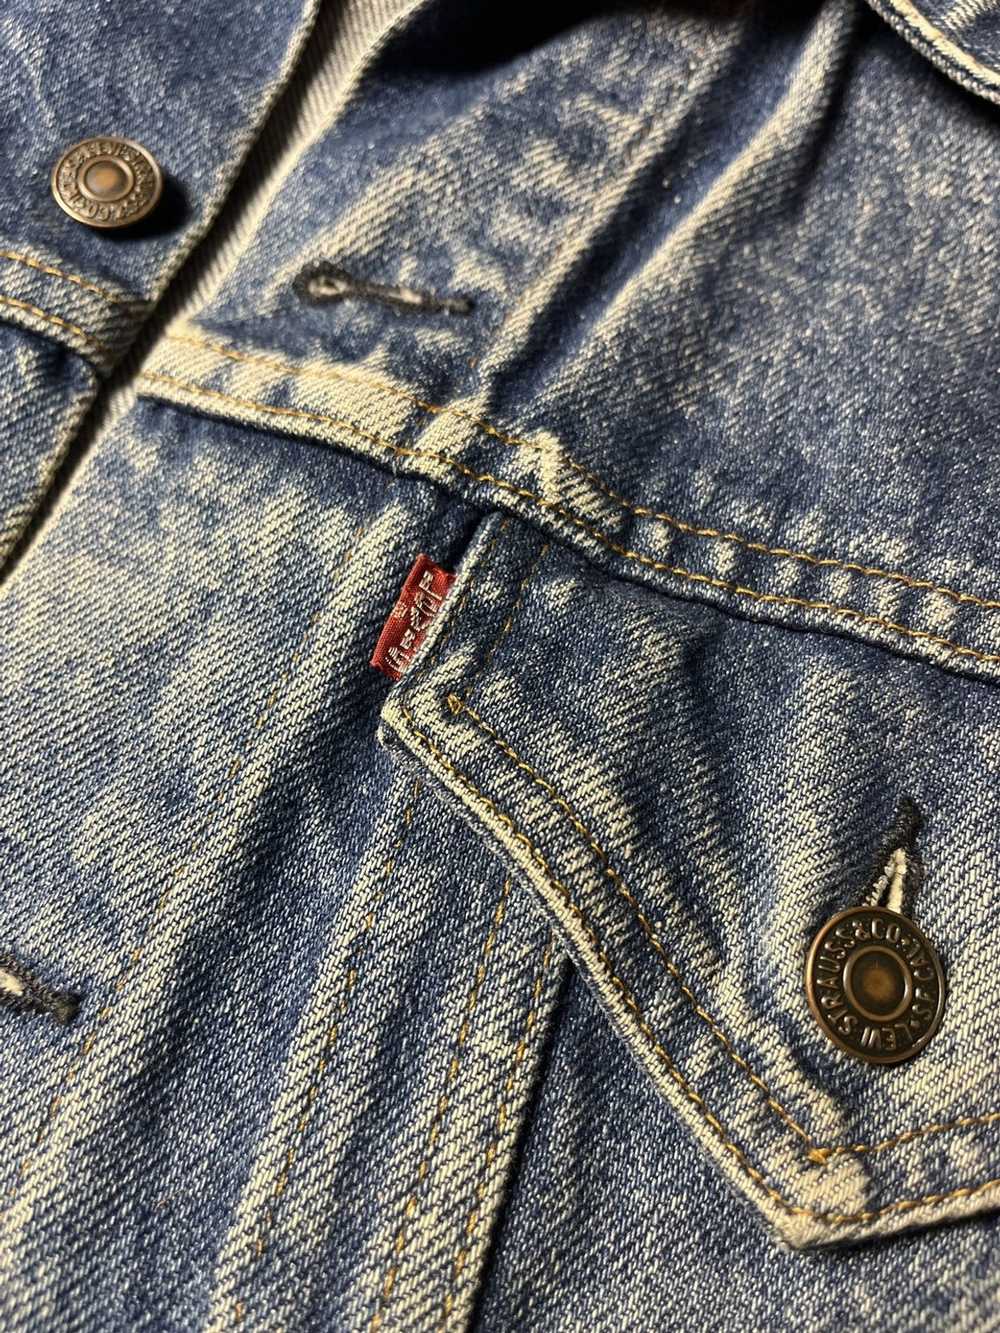 Vintage Vintage made in the USA Levi’s jean jacket - image 3